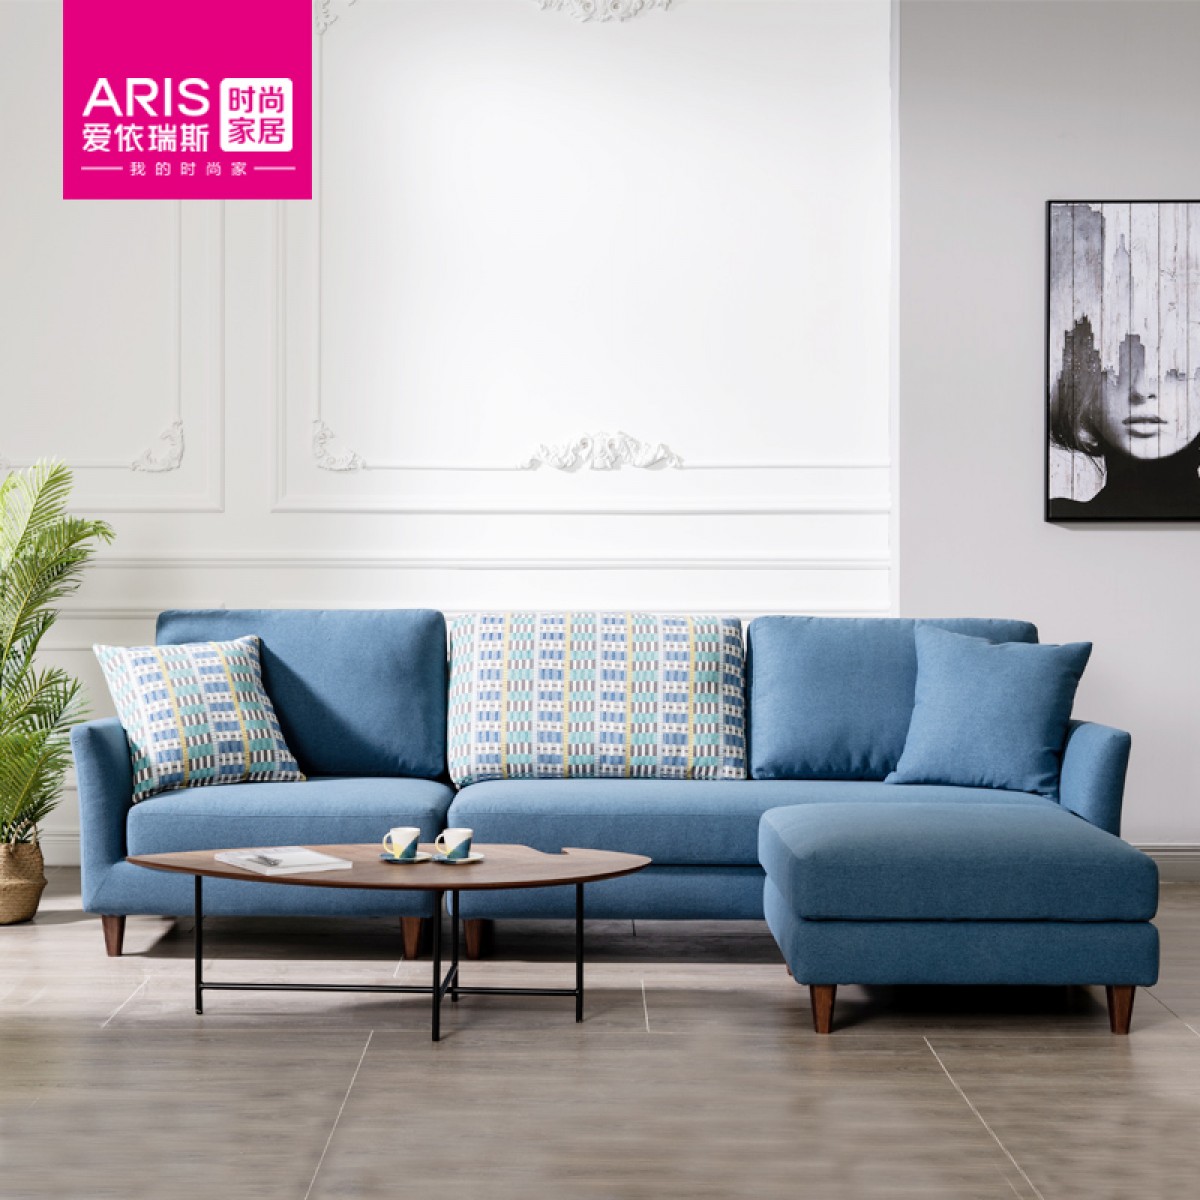 ARIS爱依瑞斯布艺沙发客厅北欧家具小户型布沙发WFS-111升级版